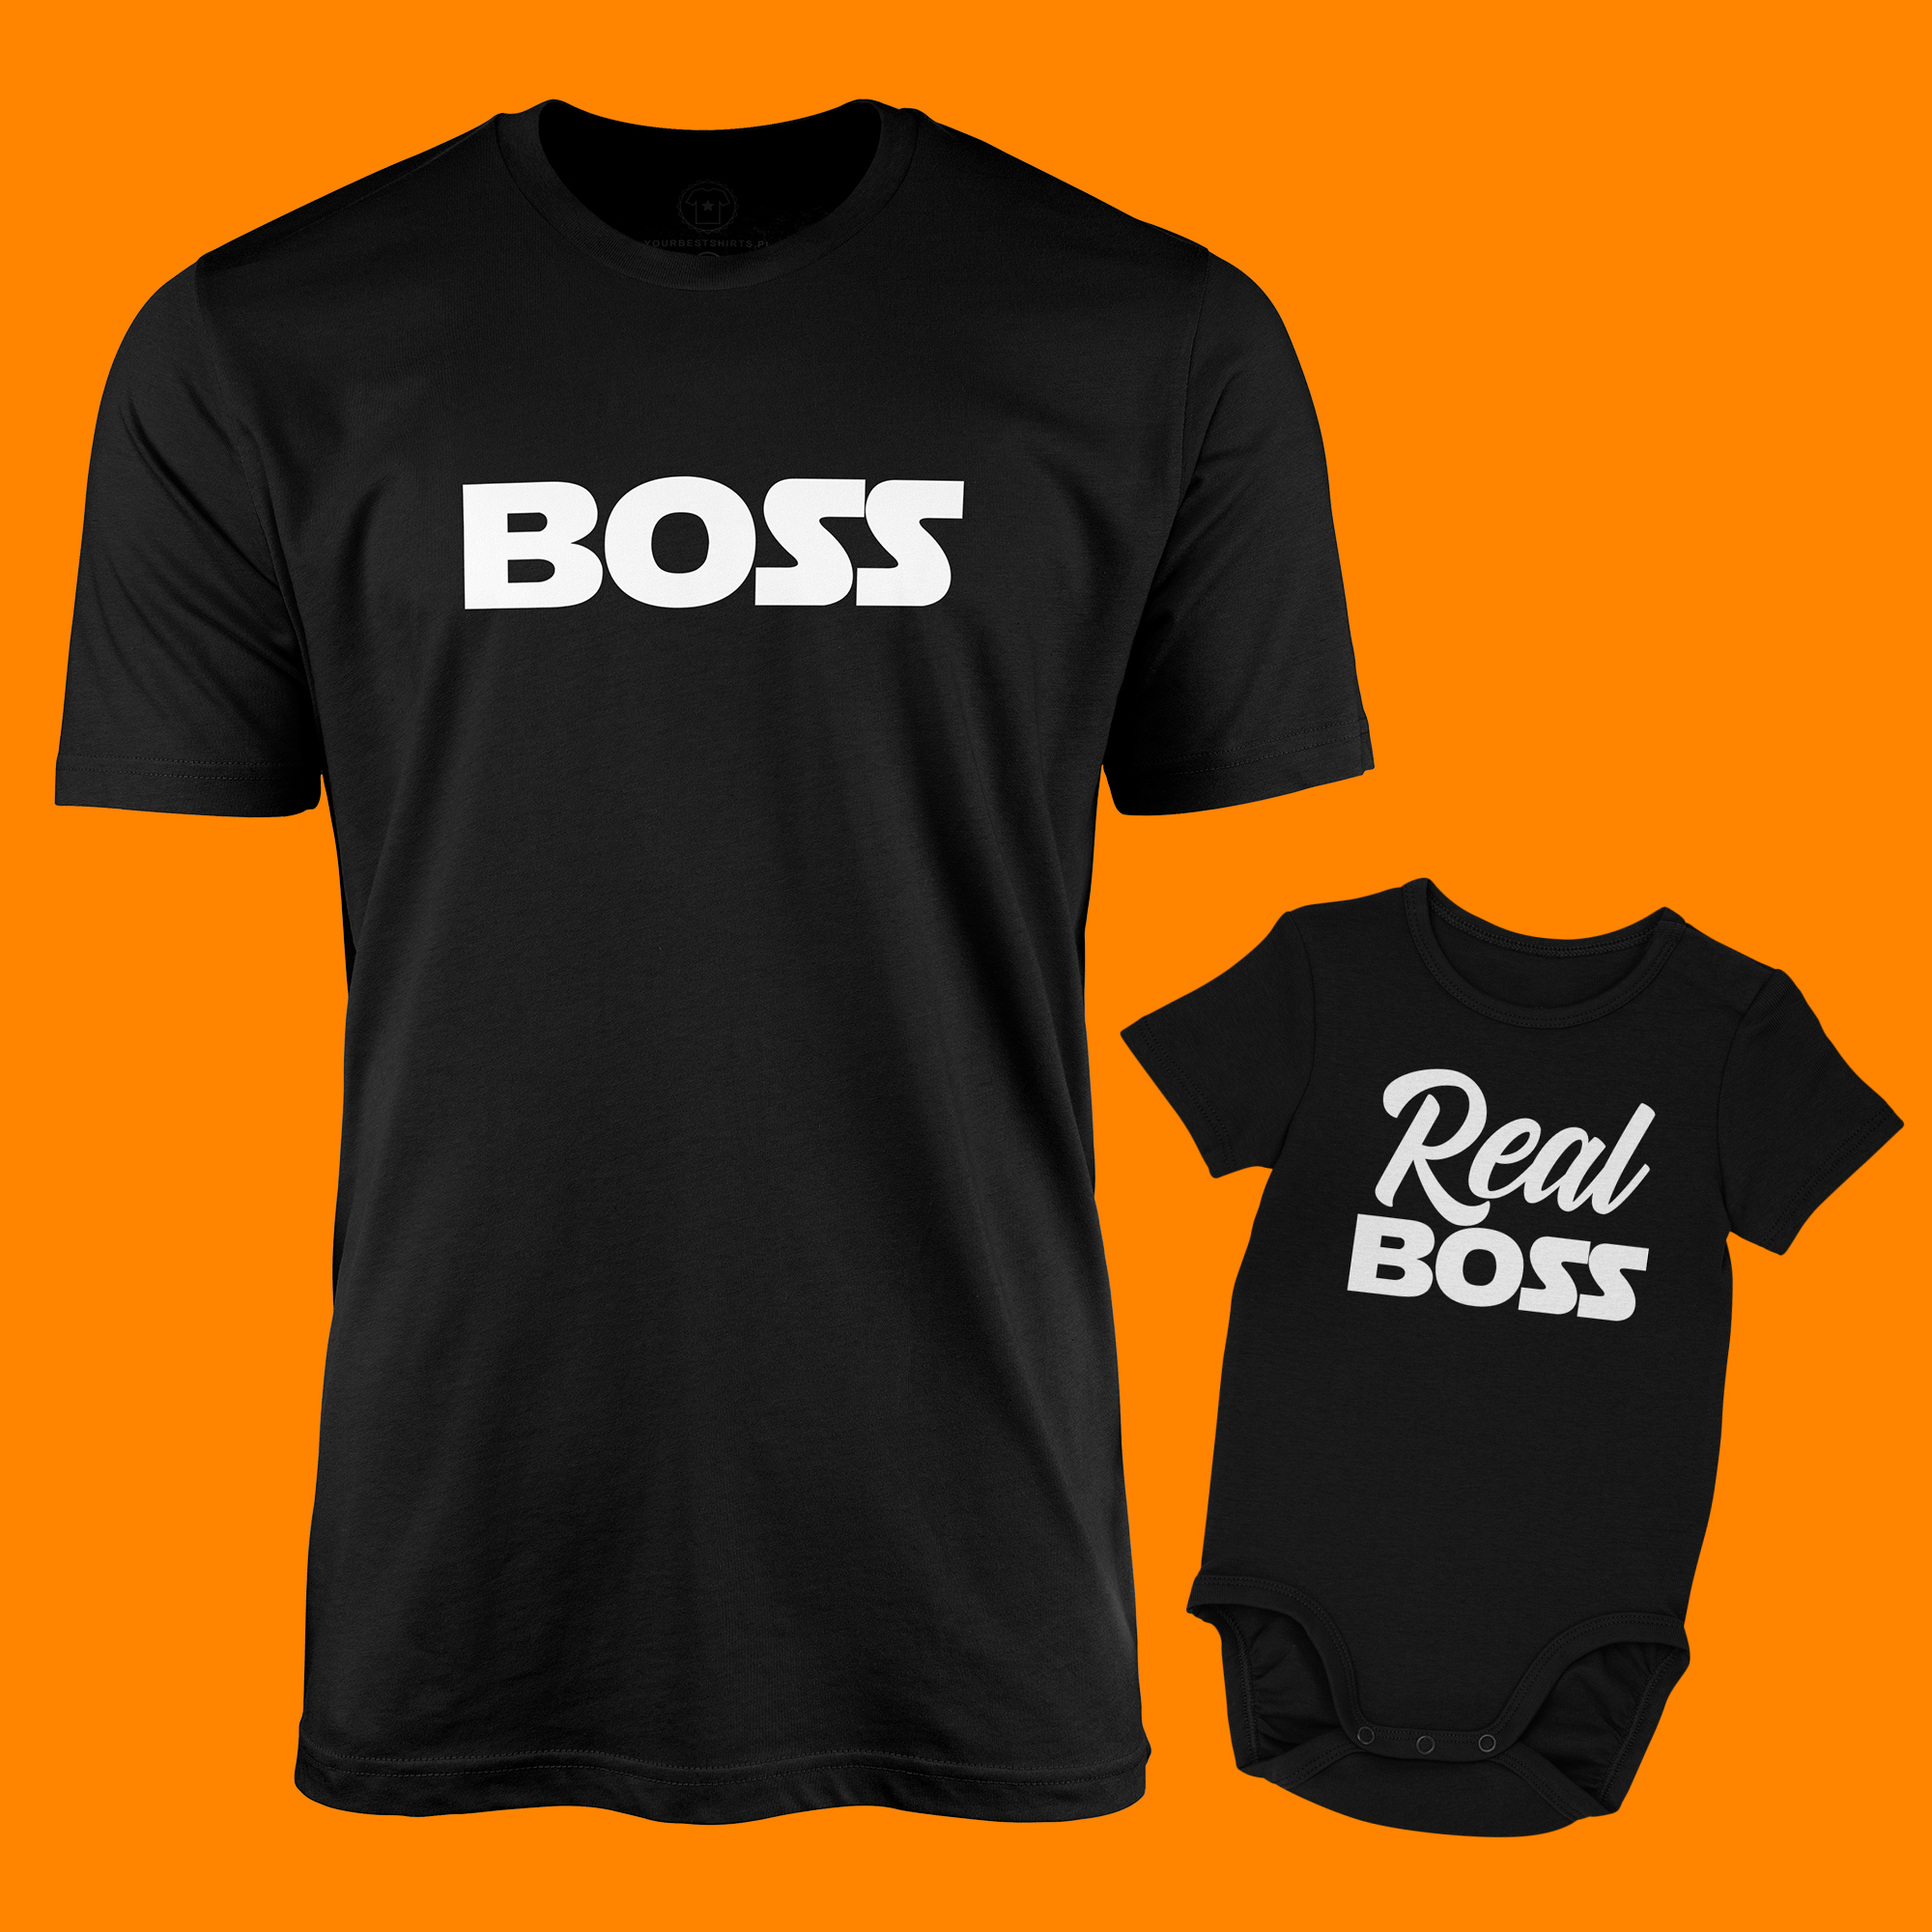 Zestaw dla taty i niemowlaka - Boss & Real Boss.